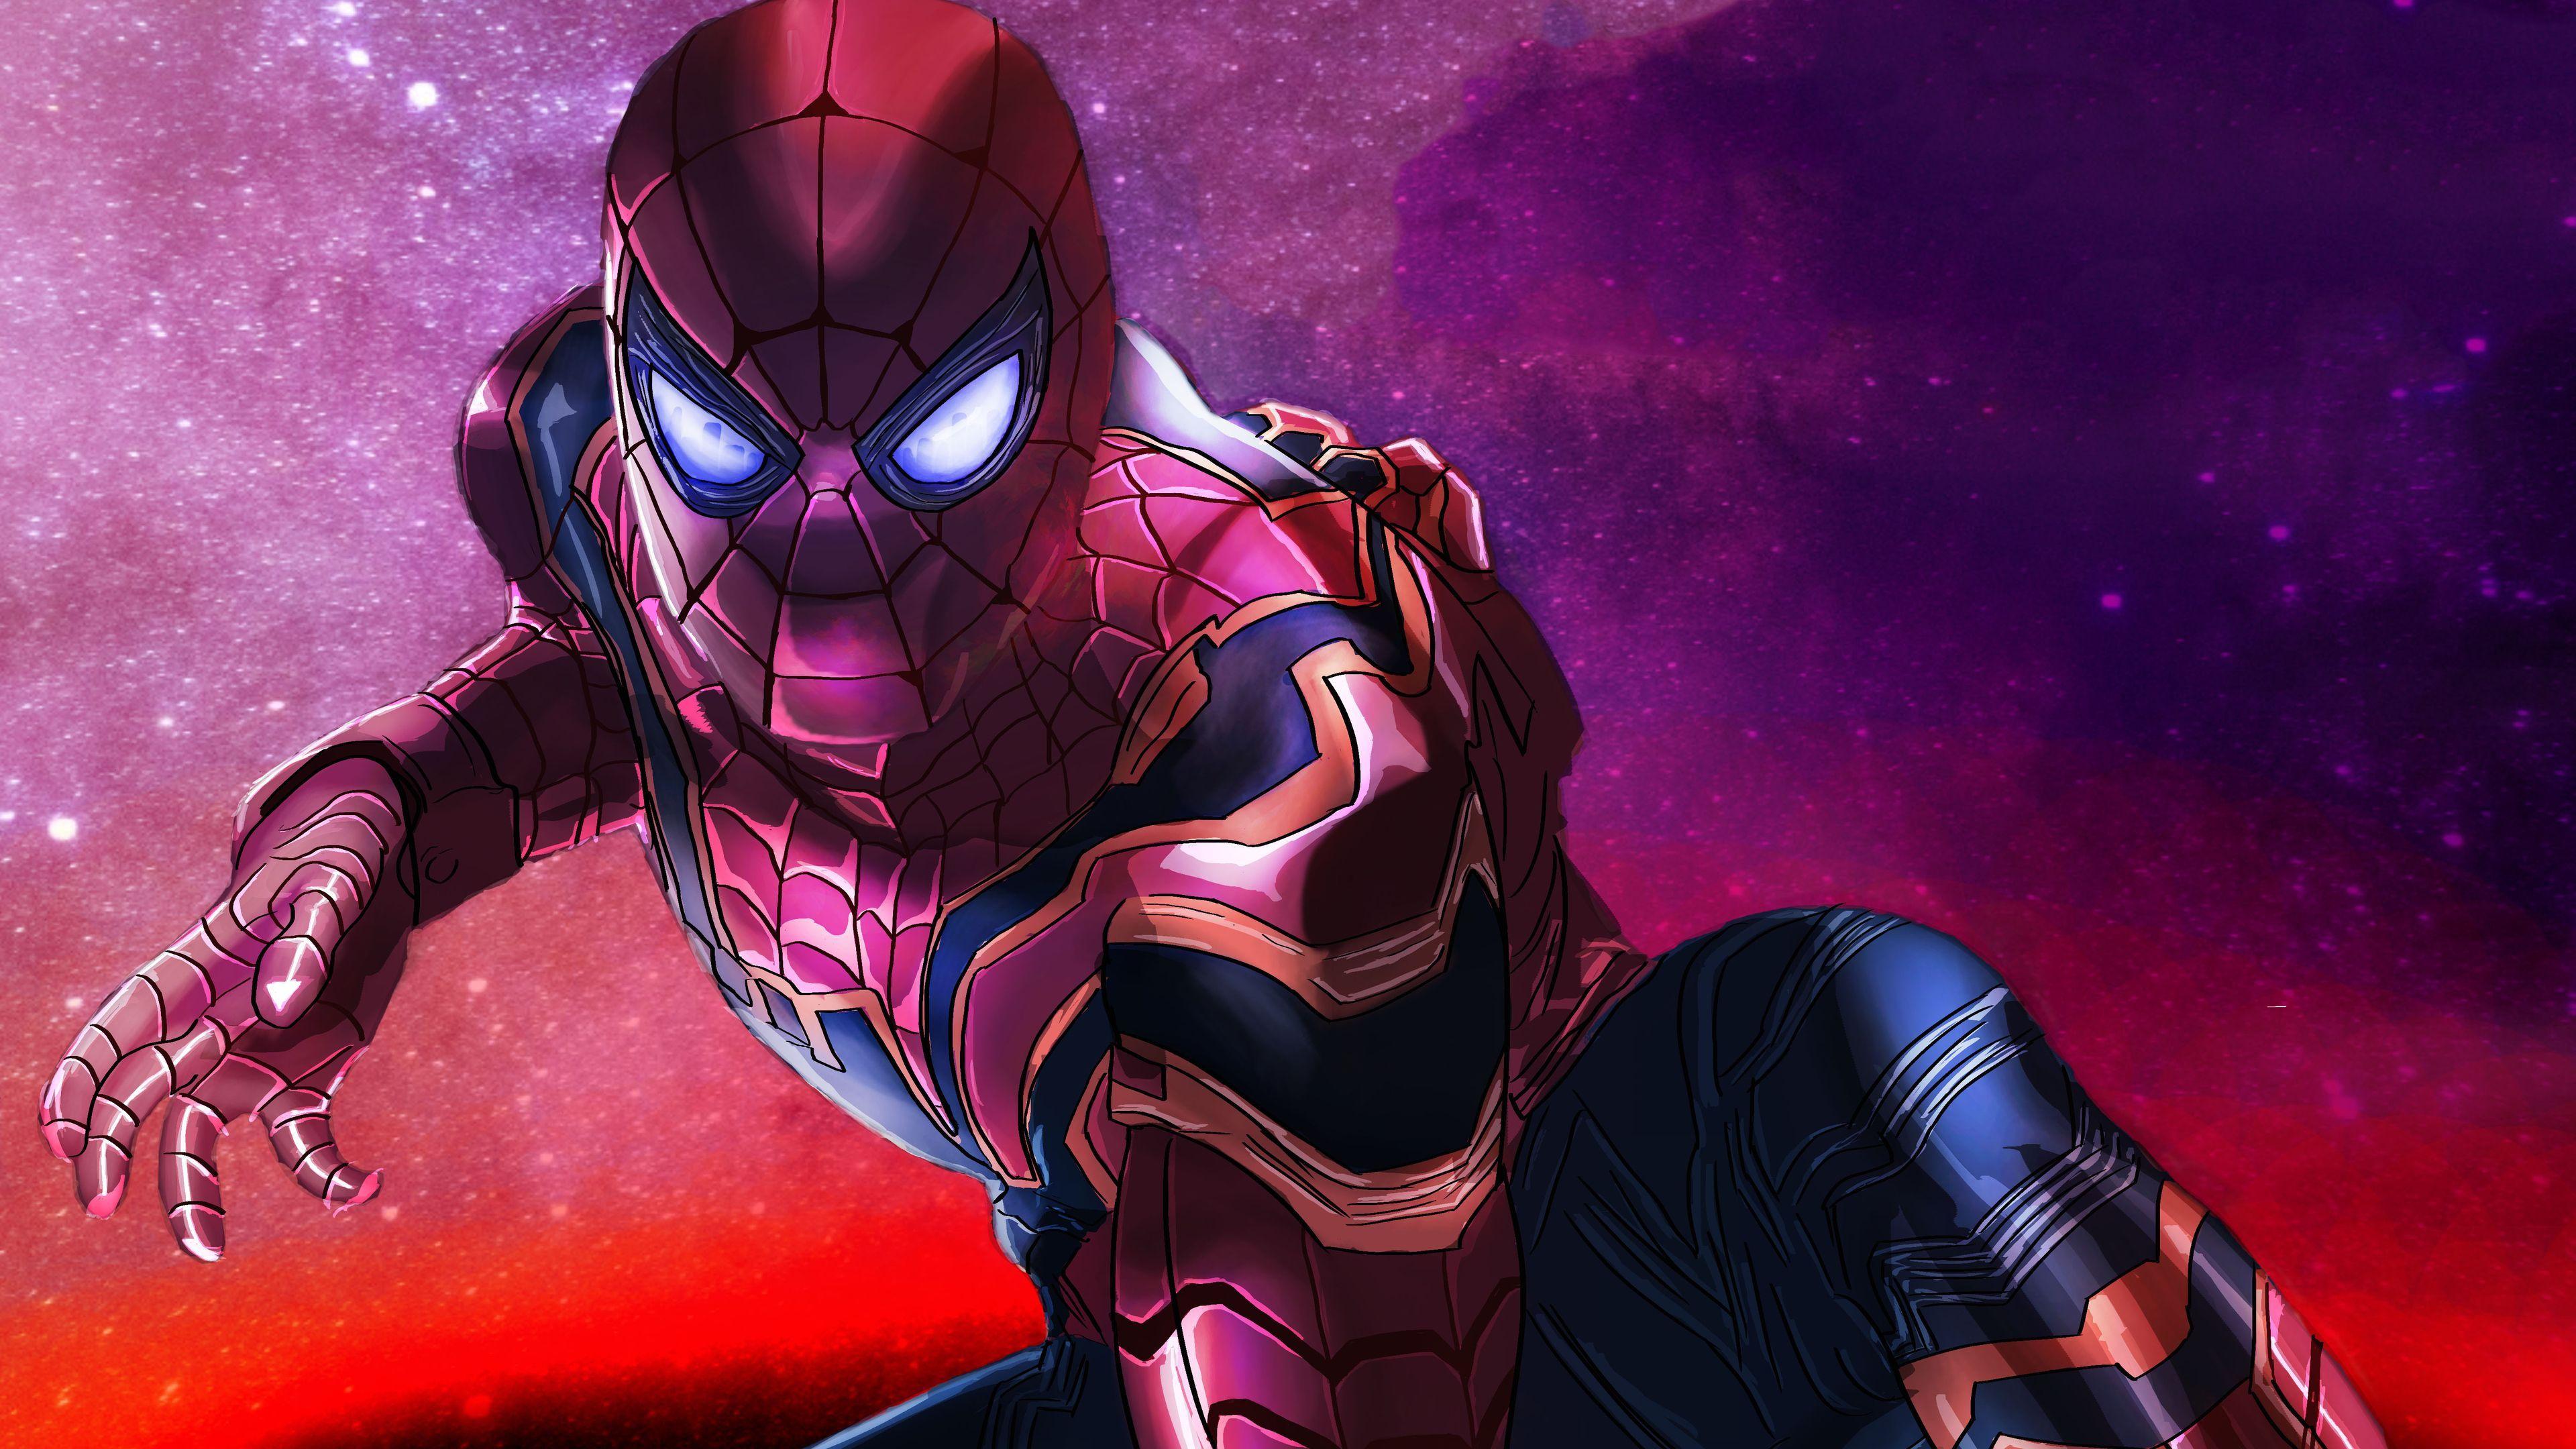 Spiderman 4k Avengers Infinity War .com